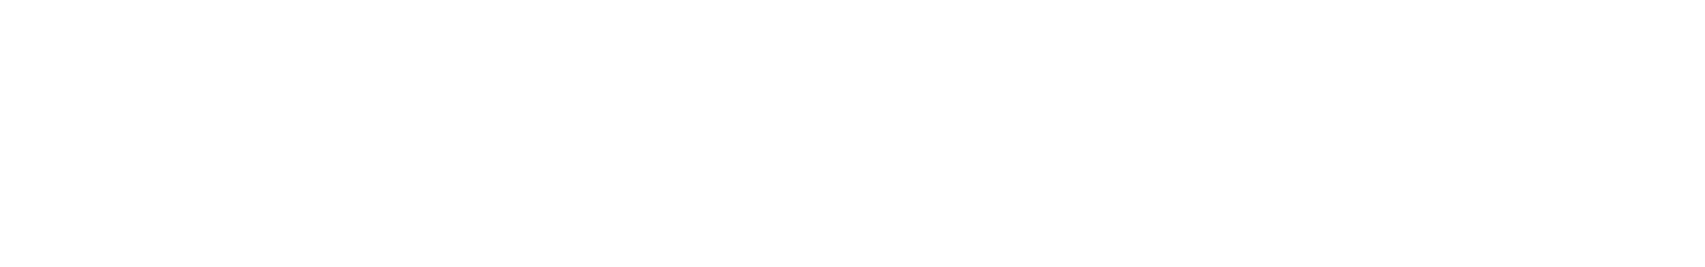 HEATLOCK_logo bianco_Tavola disegno 1.png